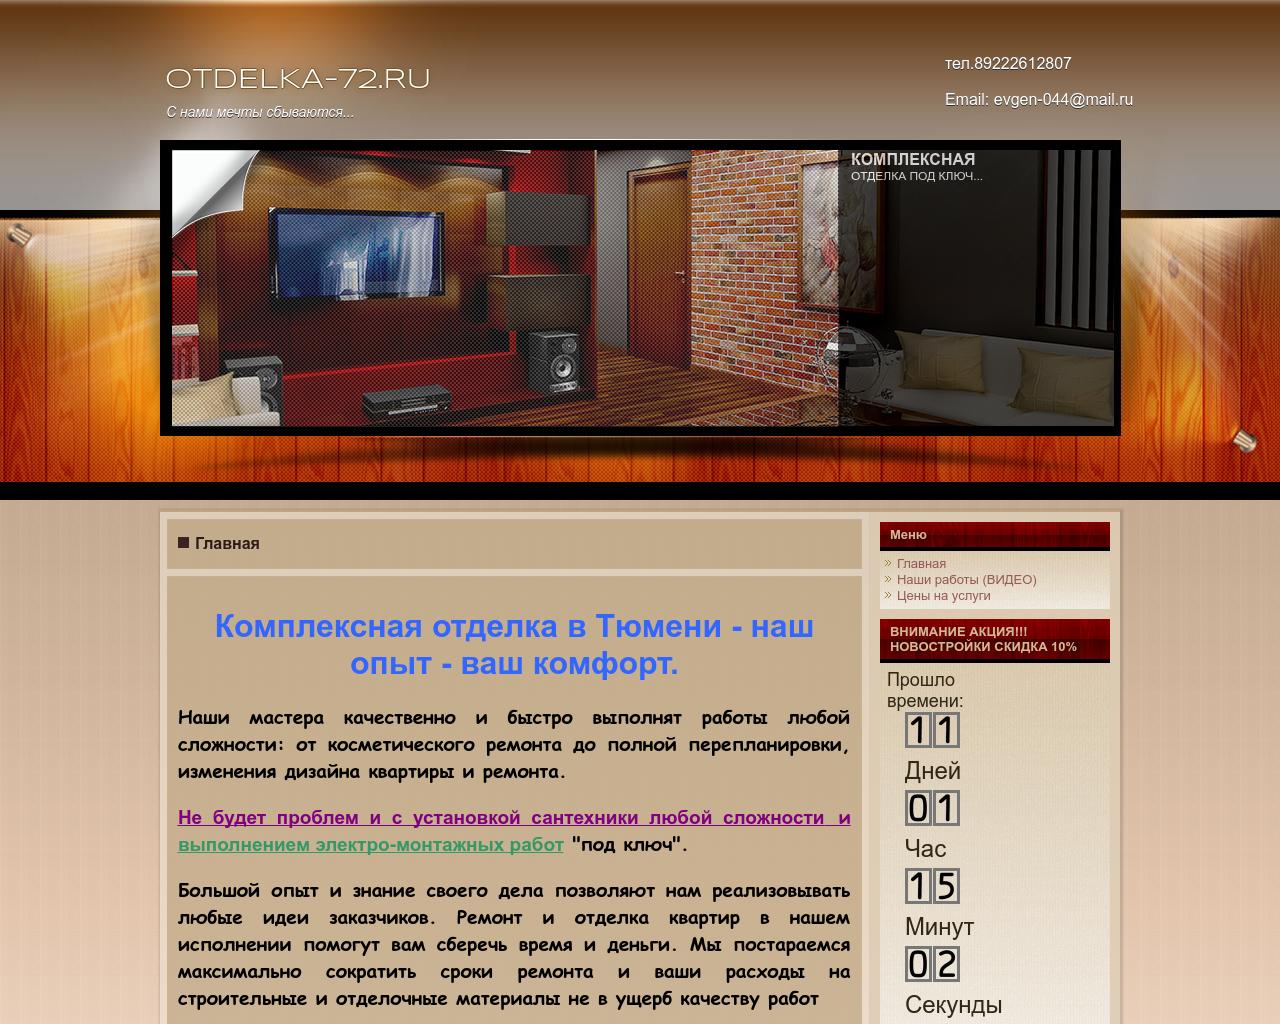 Изображение сайта otdelka-72.ru в разрешении 1280x1024